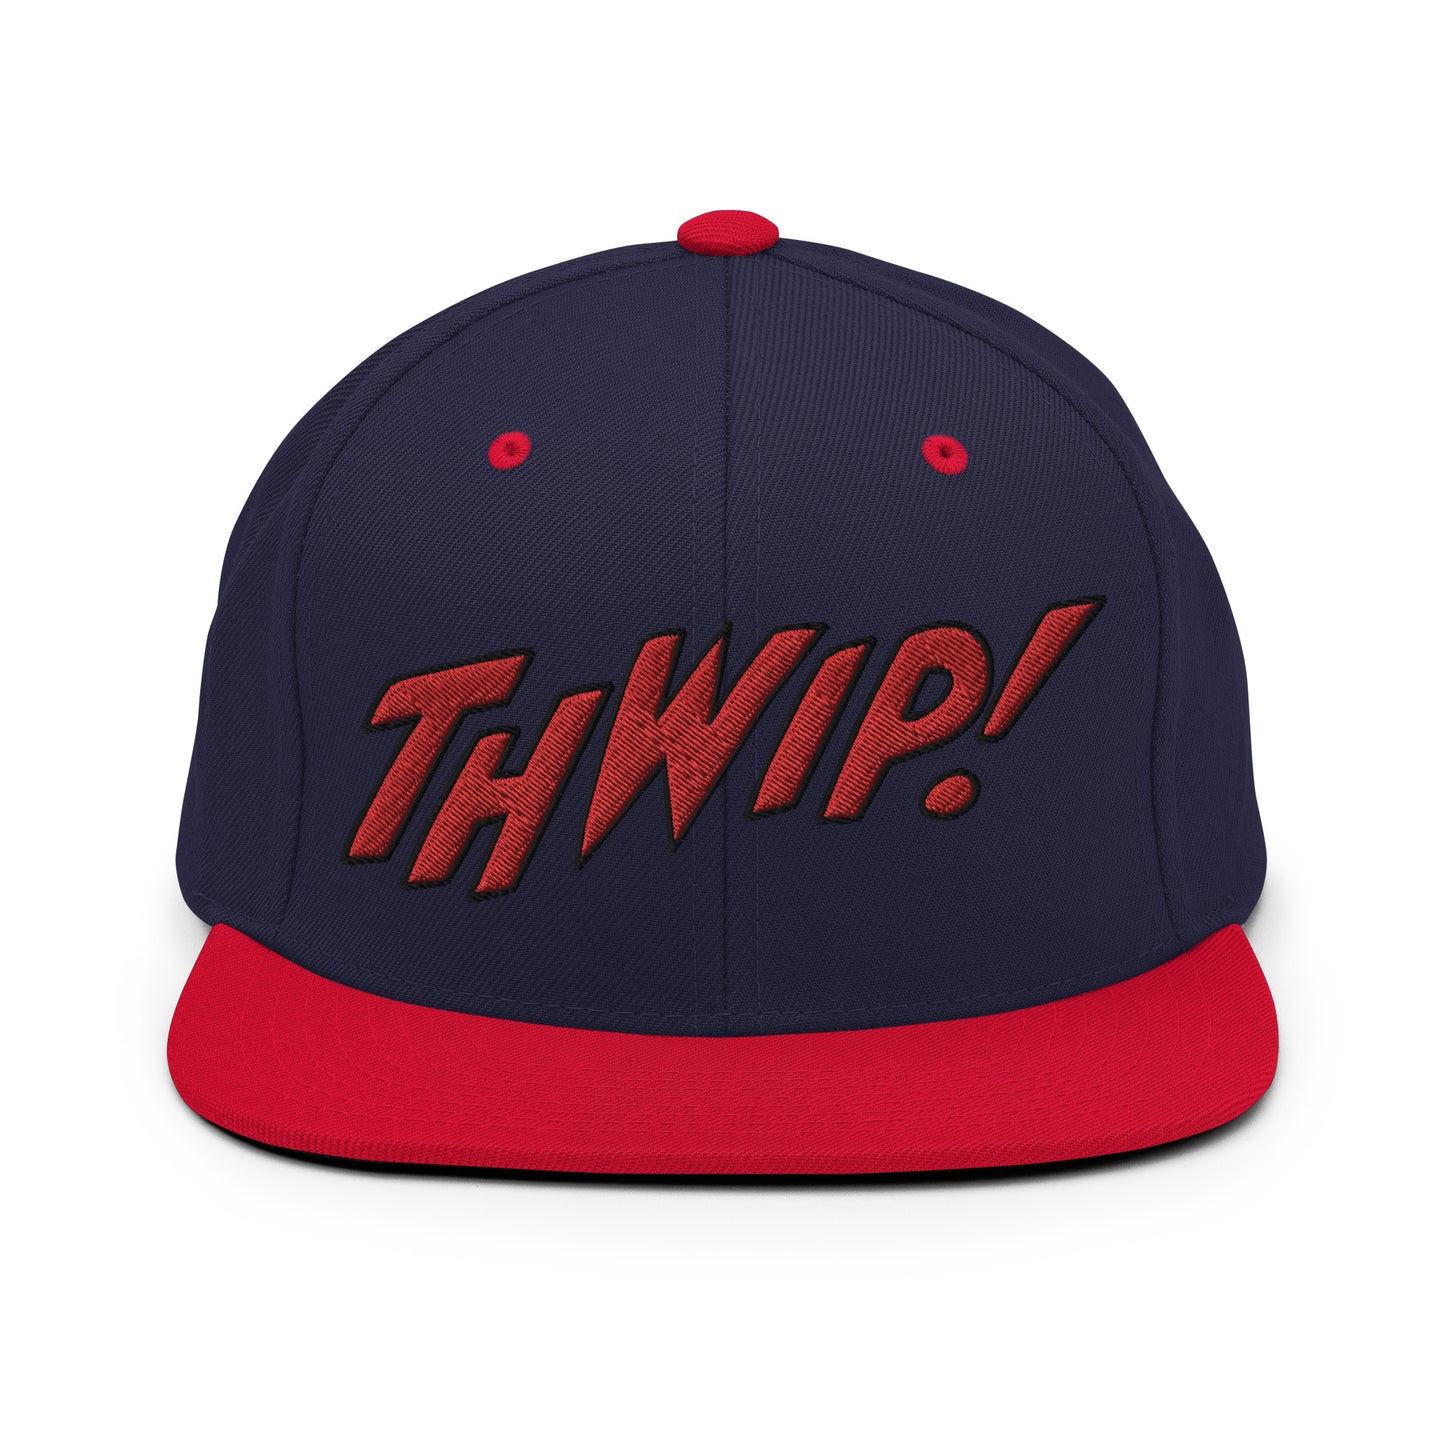 THWIP! snapback hat